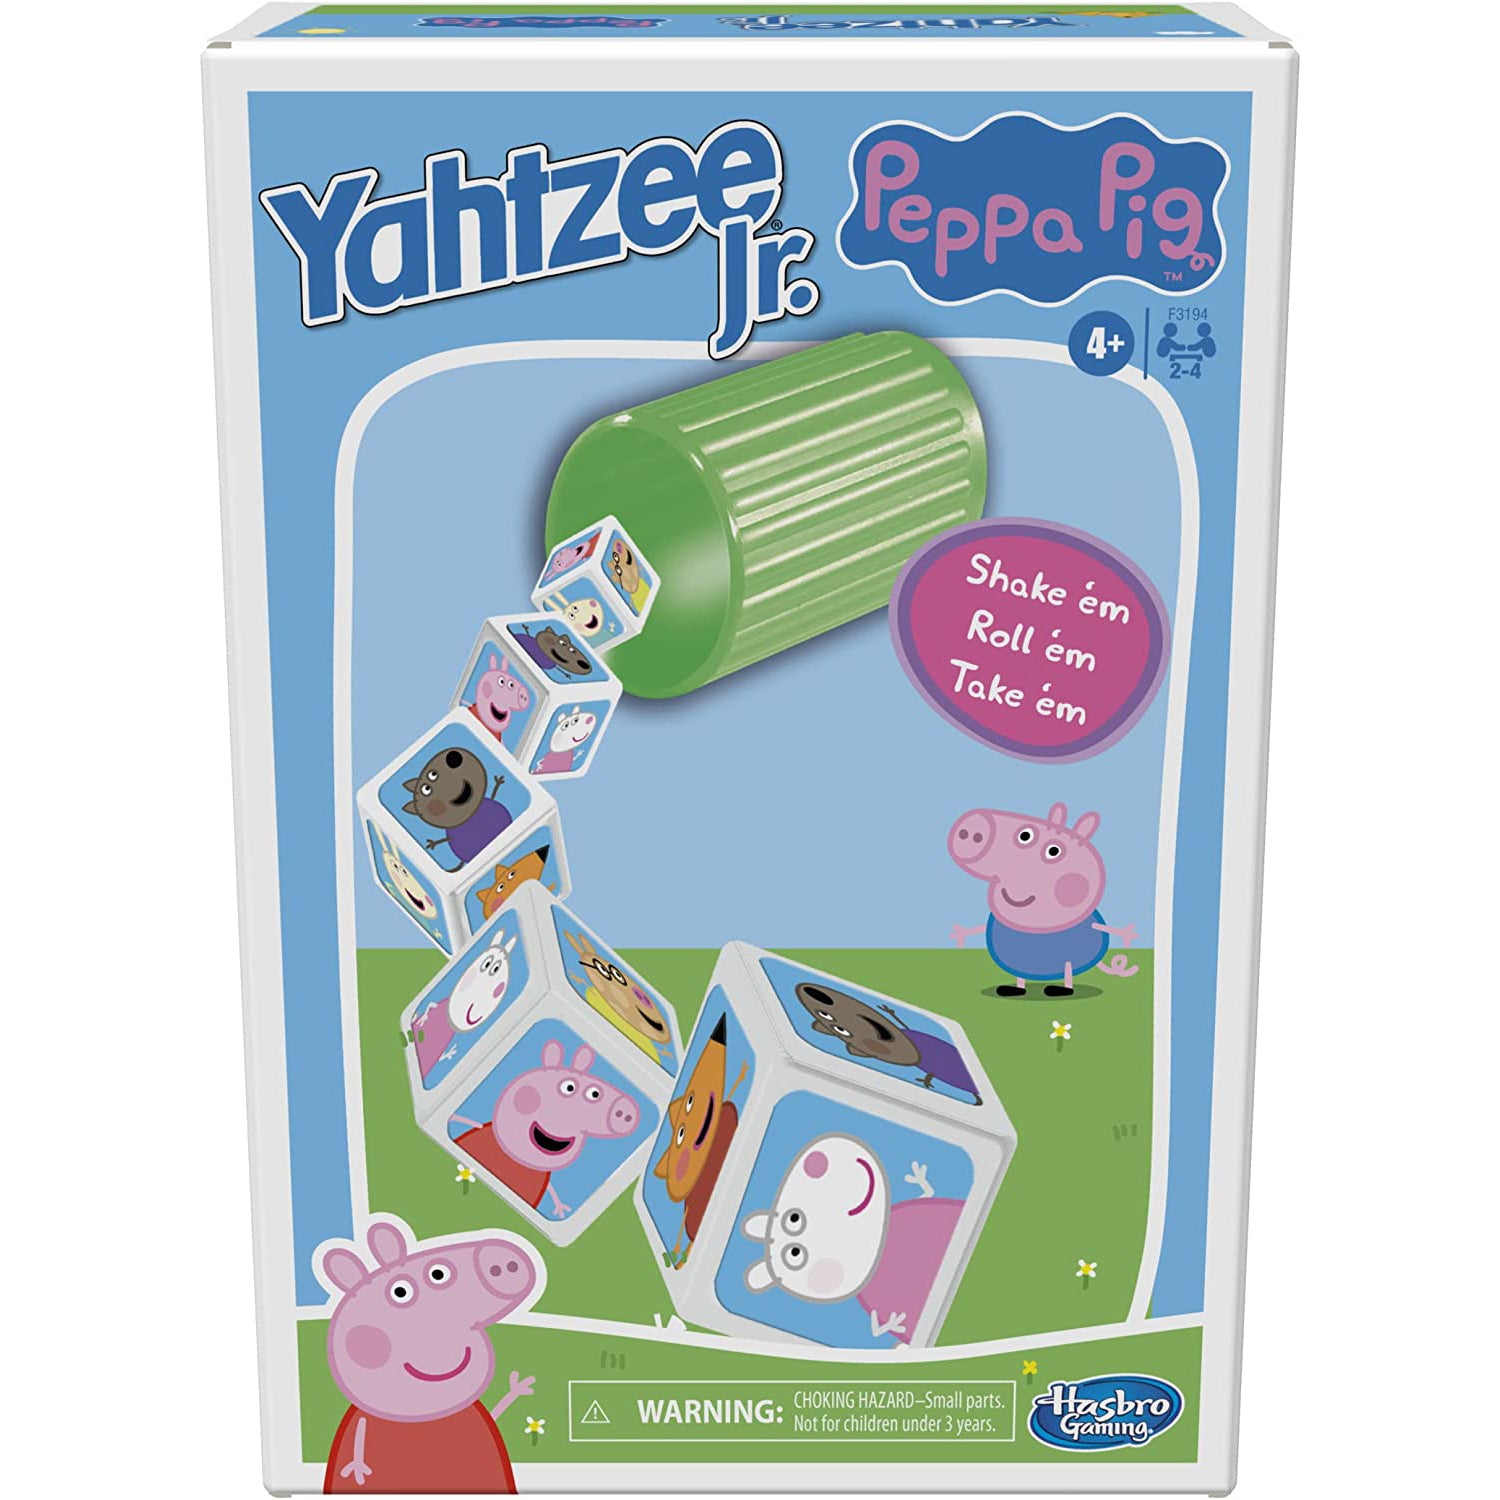 Yahtzee Jr - Peppa Pig Edition